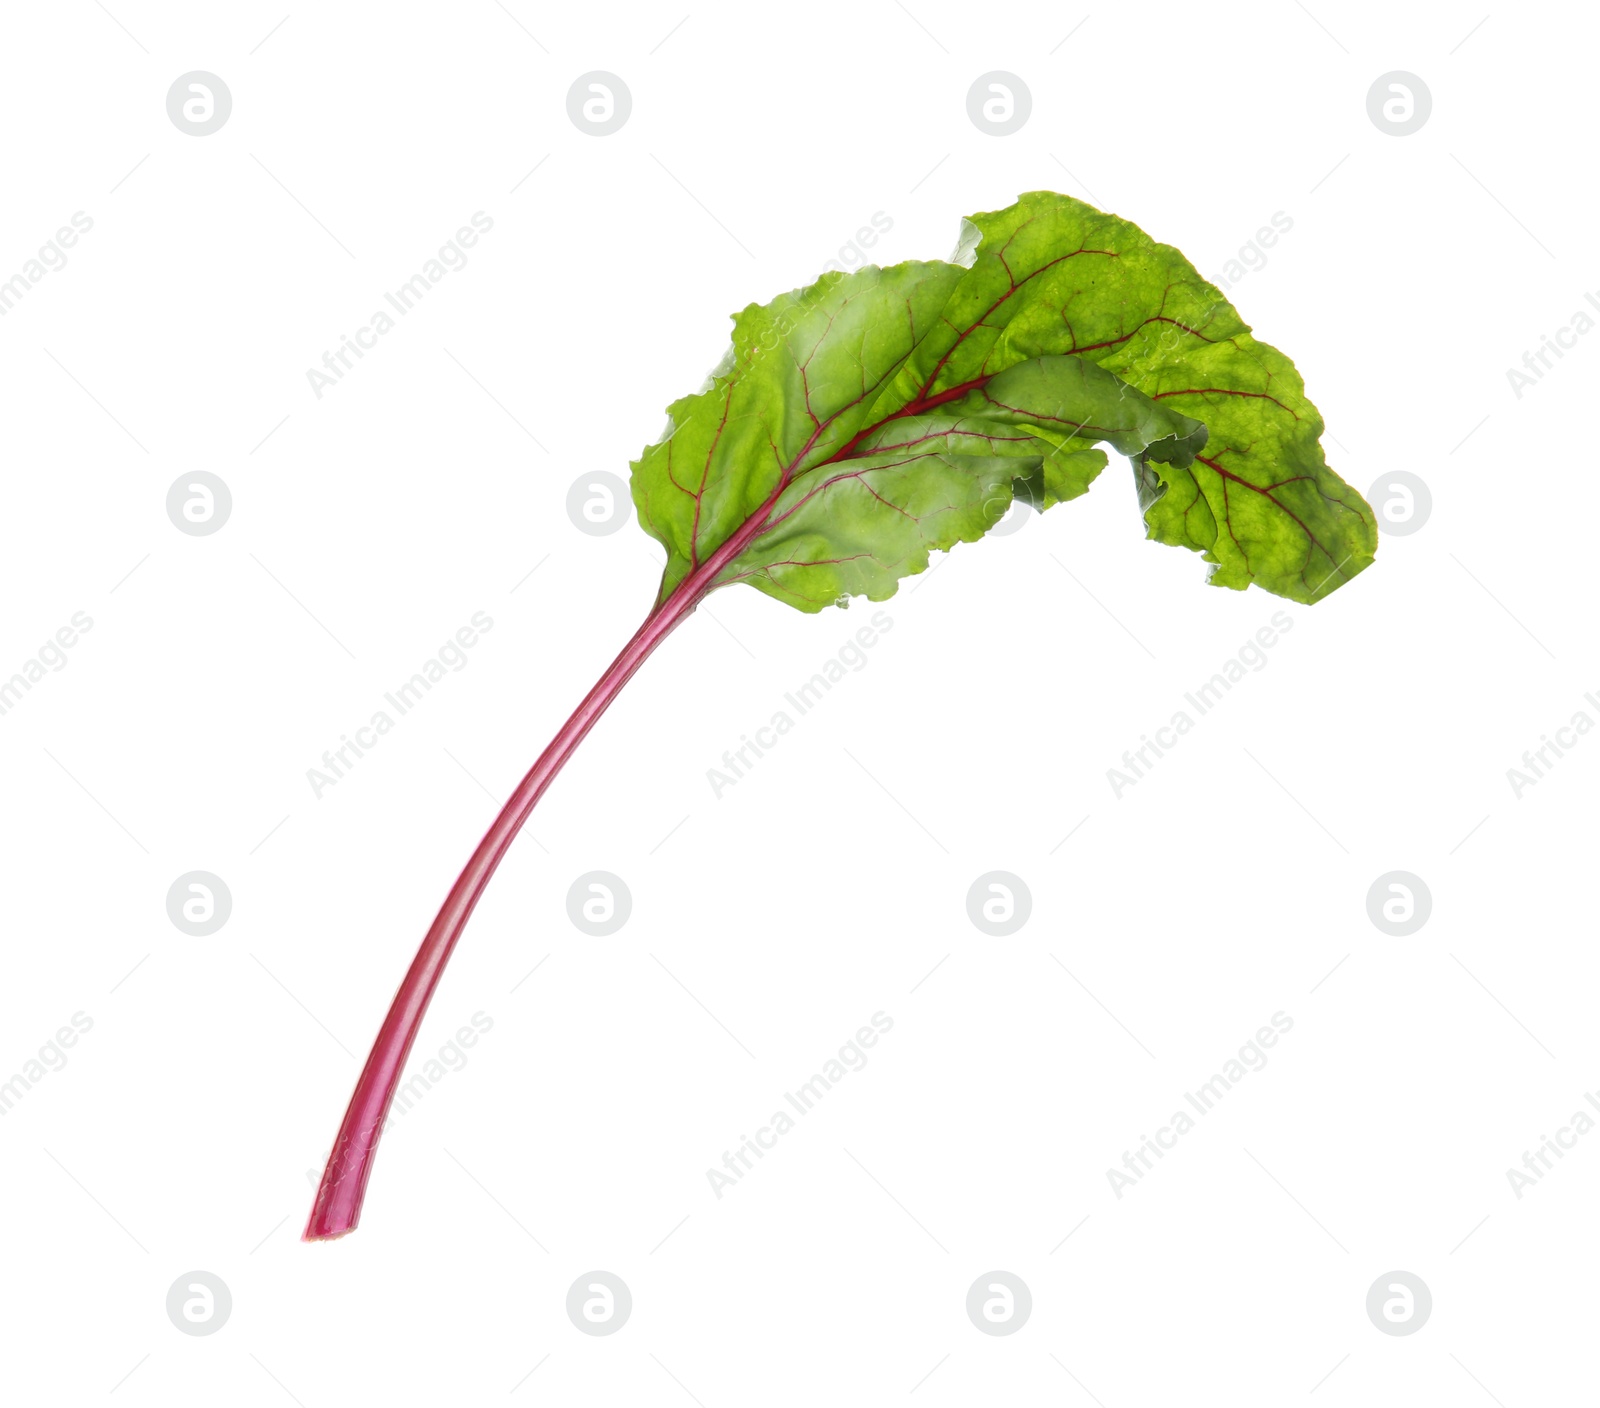 Photo of Leaf of fresh beet on white background